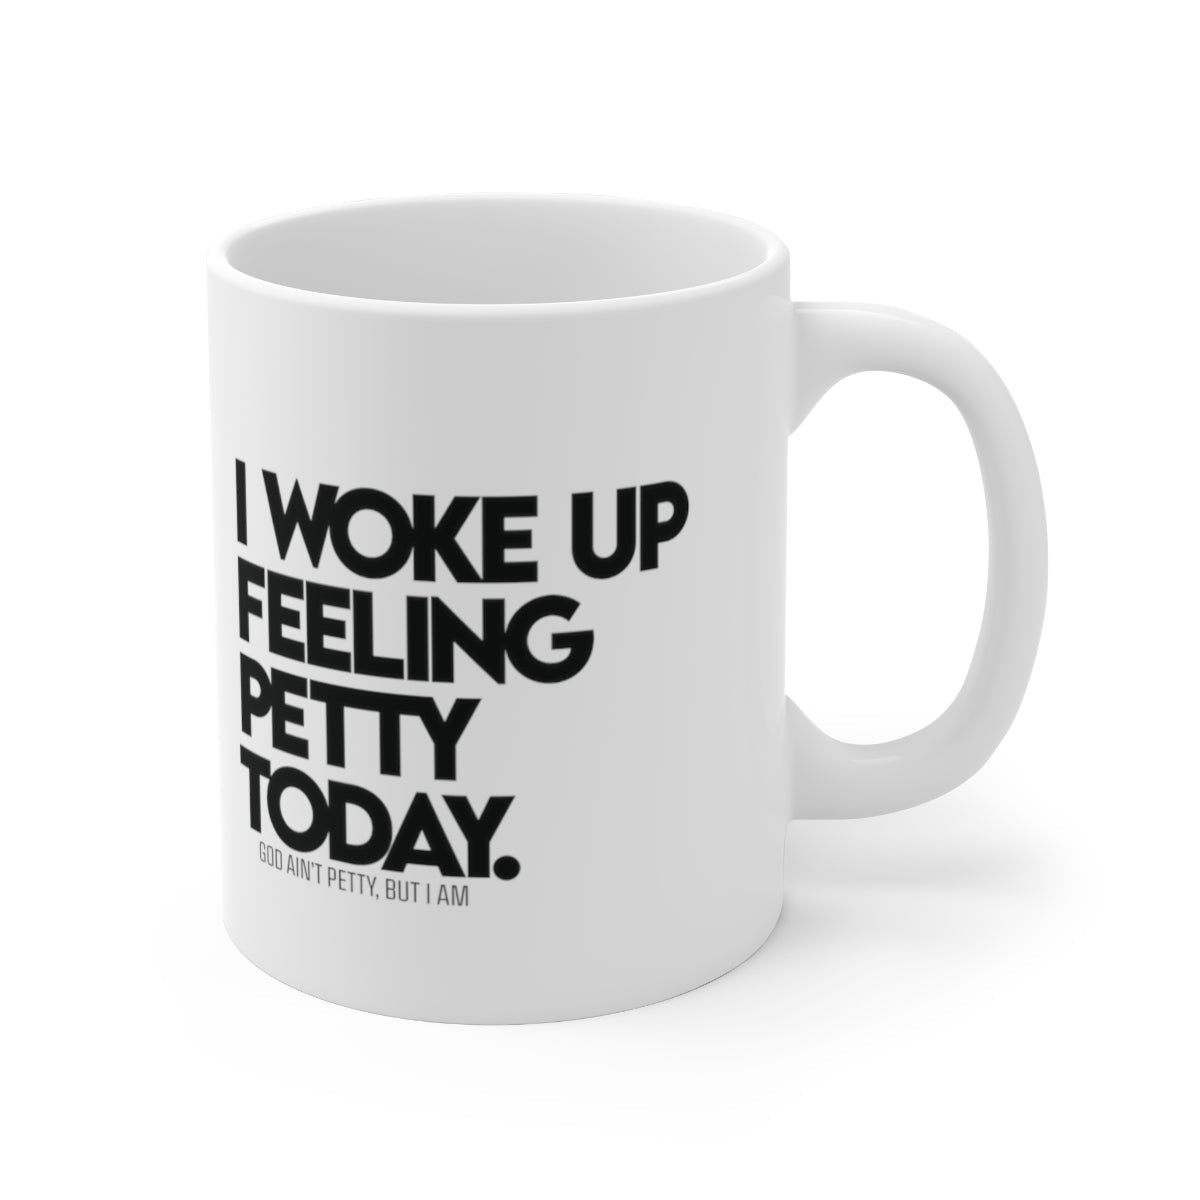 I woke up feeling Petty Today Mug 11oz (White/Black)-Mug-The Original God Ain't Petty But I Am